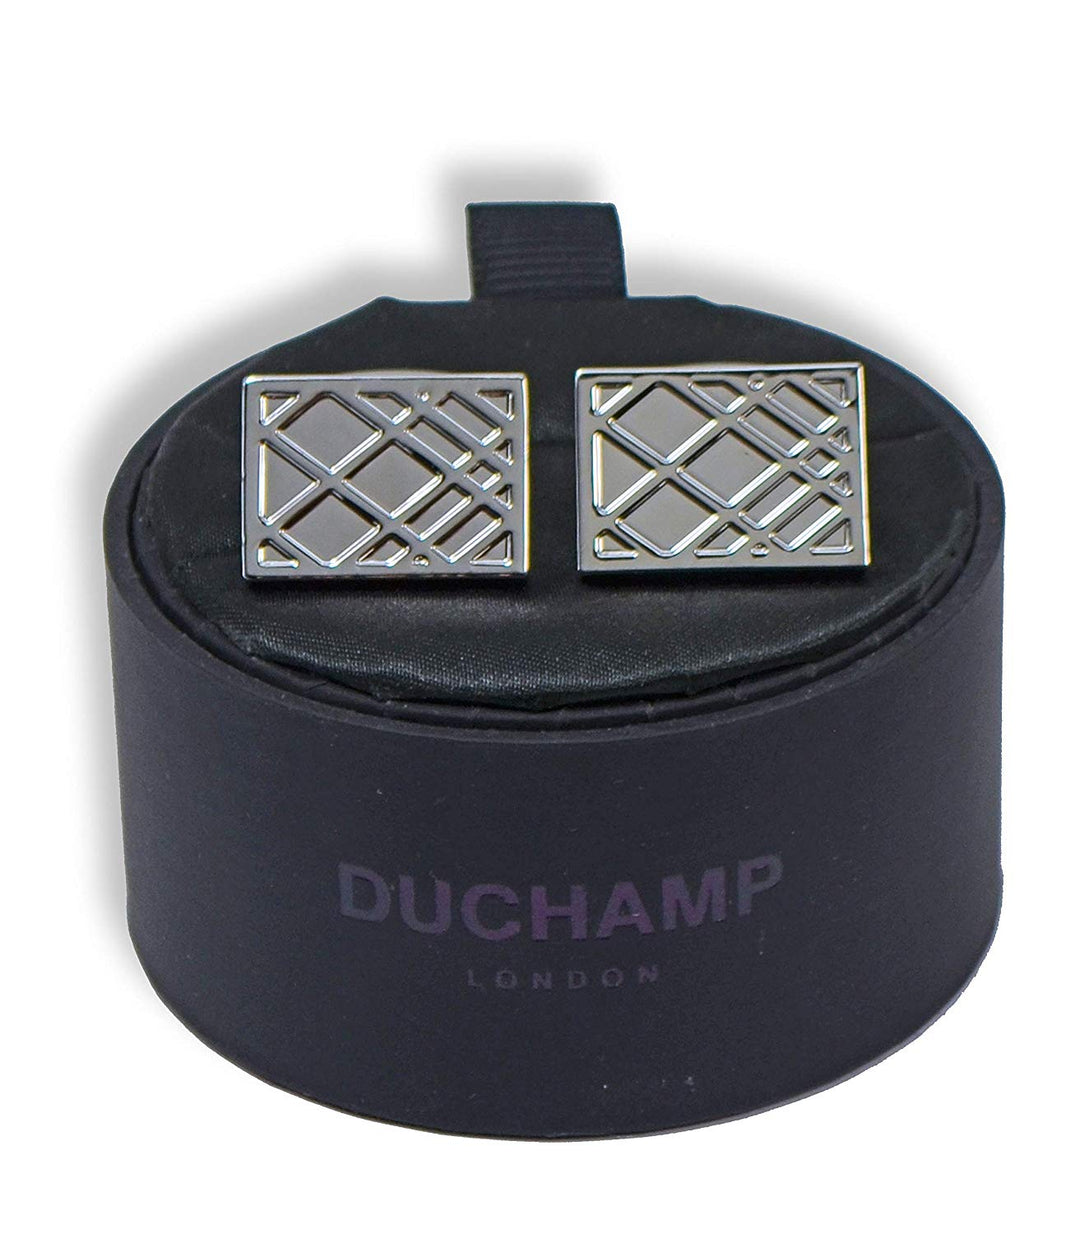 Duchamp London Square Cuff Links